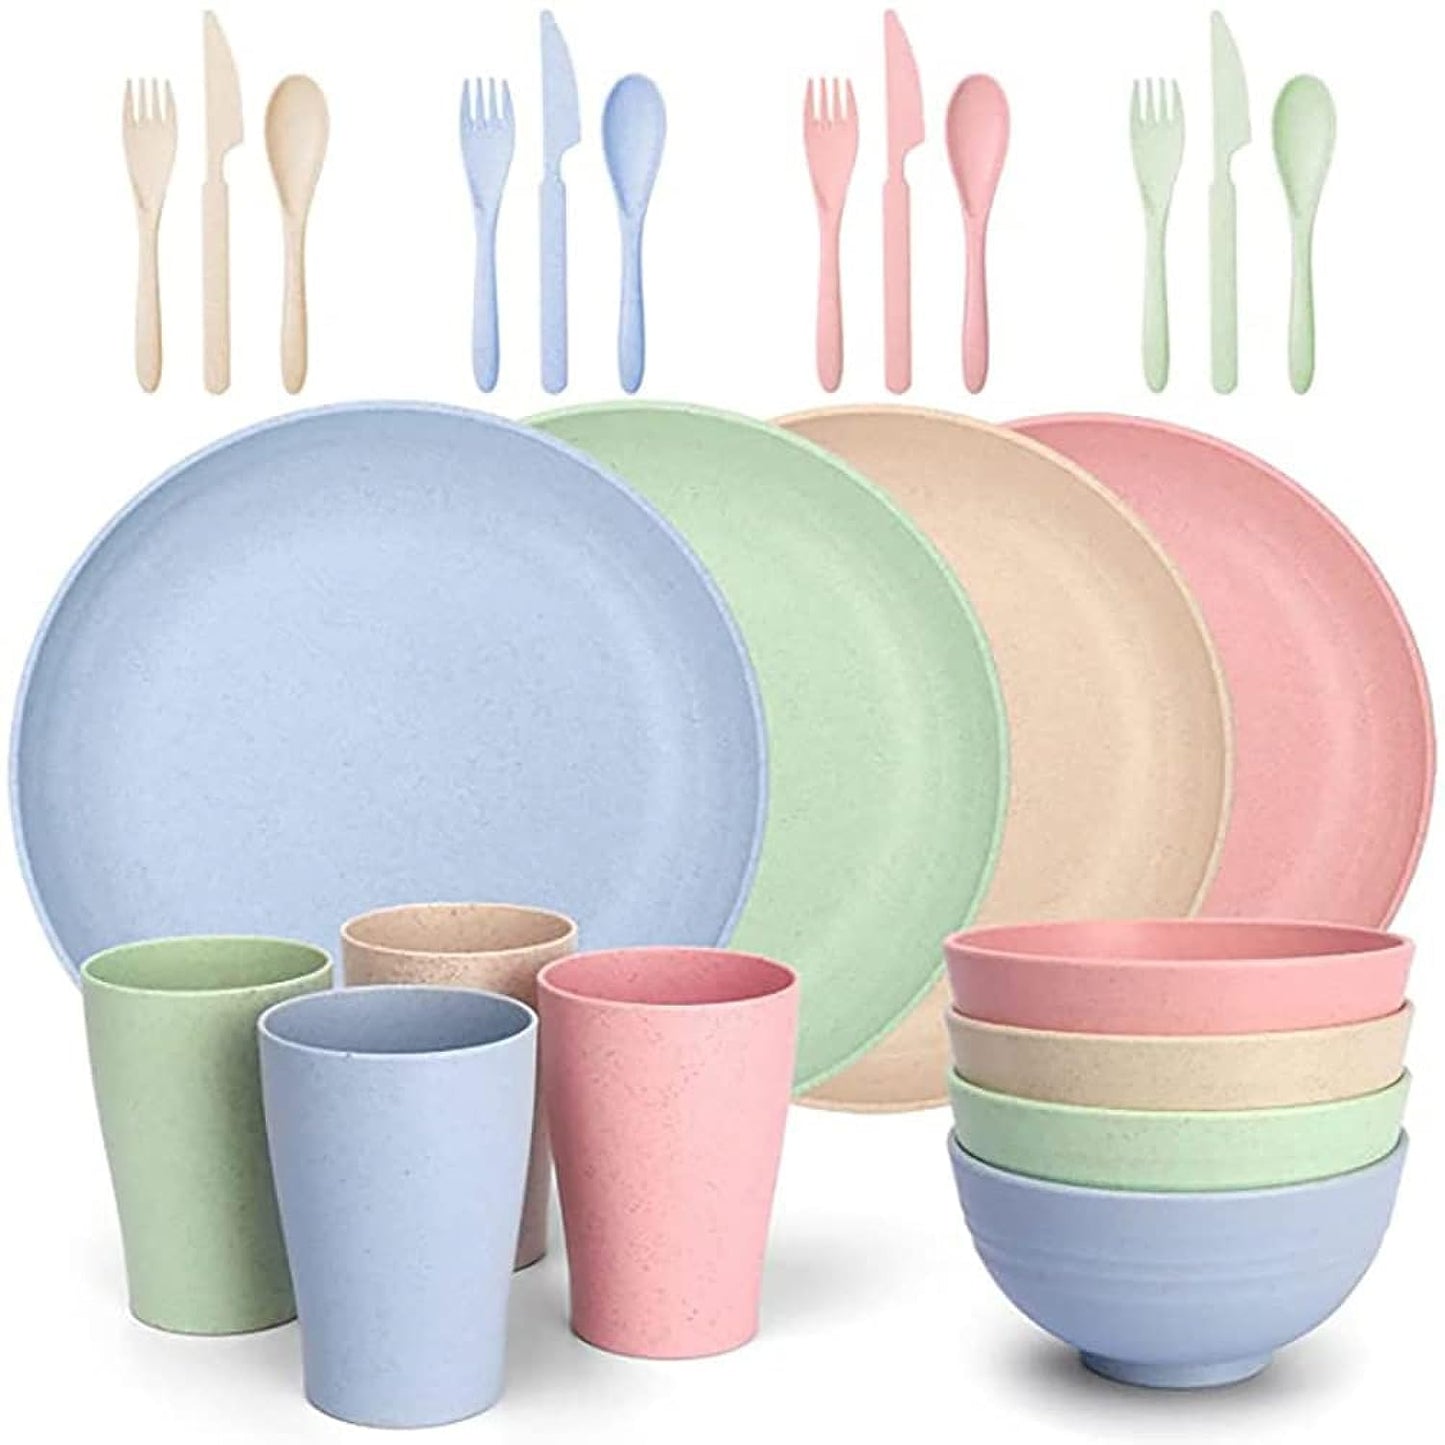 24 Pieces Bowl Set Tablewares, Wheat Straw Plates,Lightweight Degradable Dinner Plates Set,Bowls, Cups, Tablewares Set, Dishwasher Safe Dinnerware Set, Unbreakable Salad Plates (4-Colors, 24)